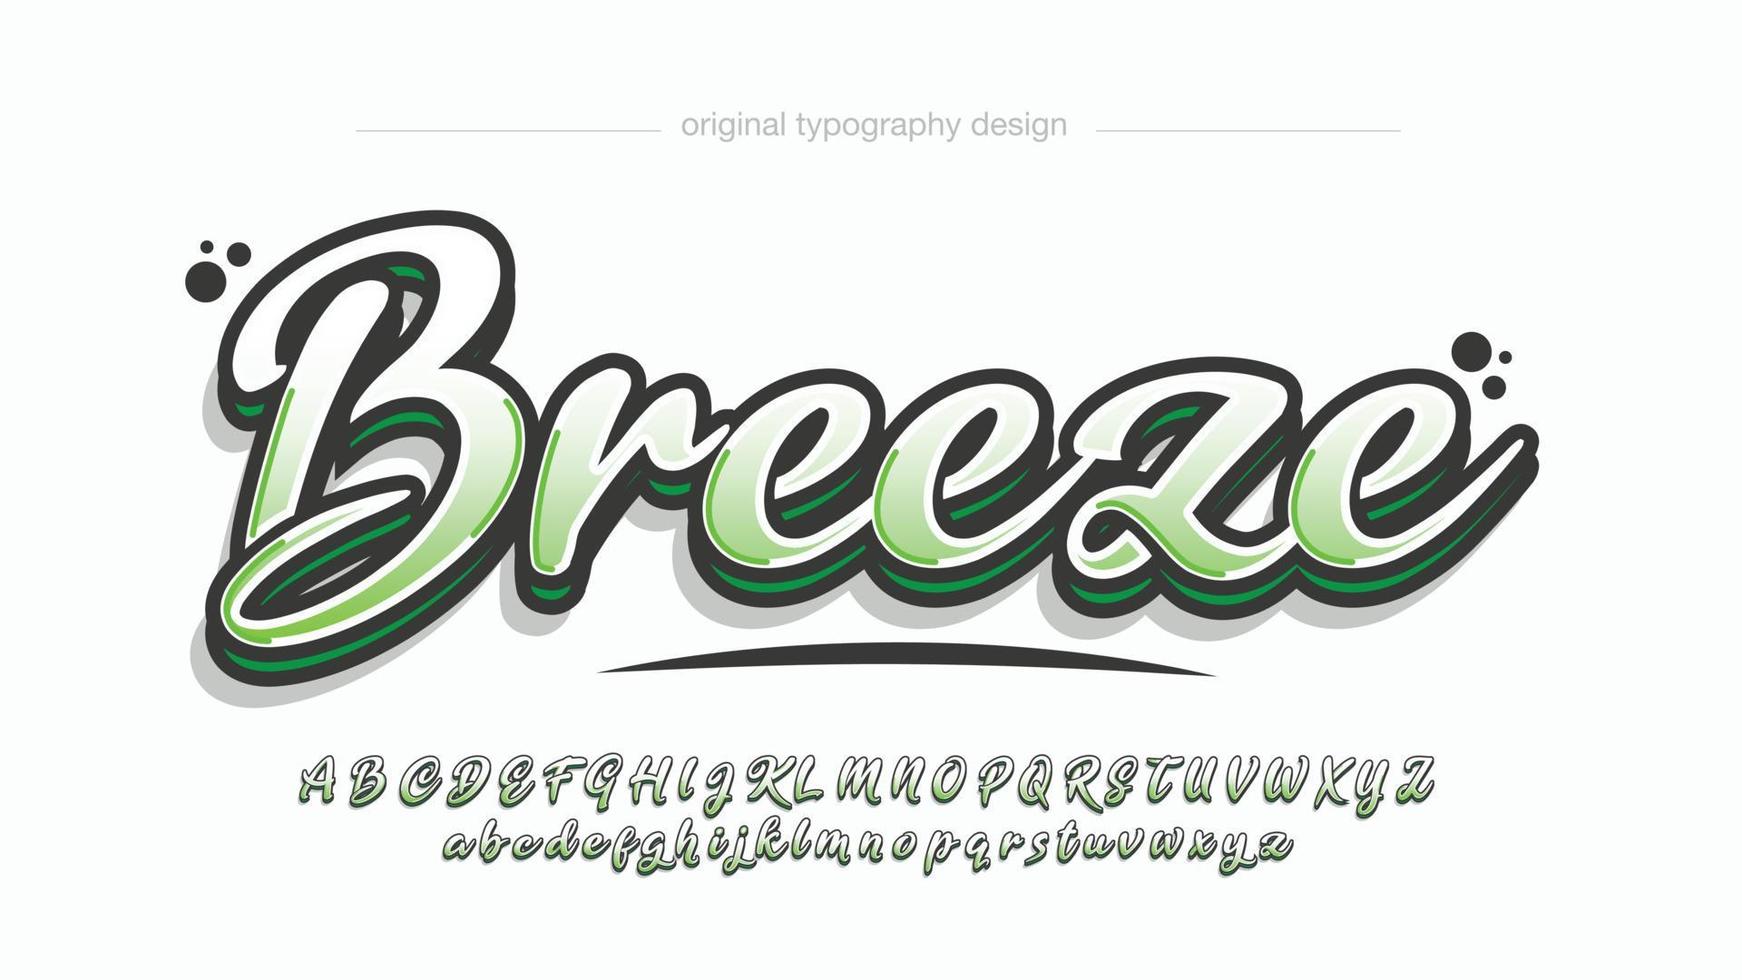 tipografia cursiva moderna 3d verde e branca vetor